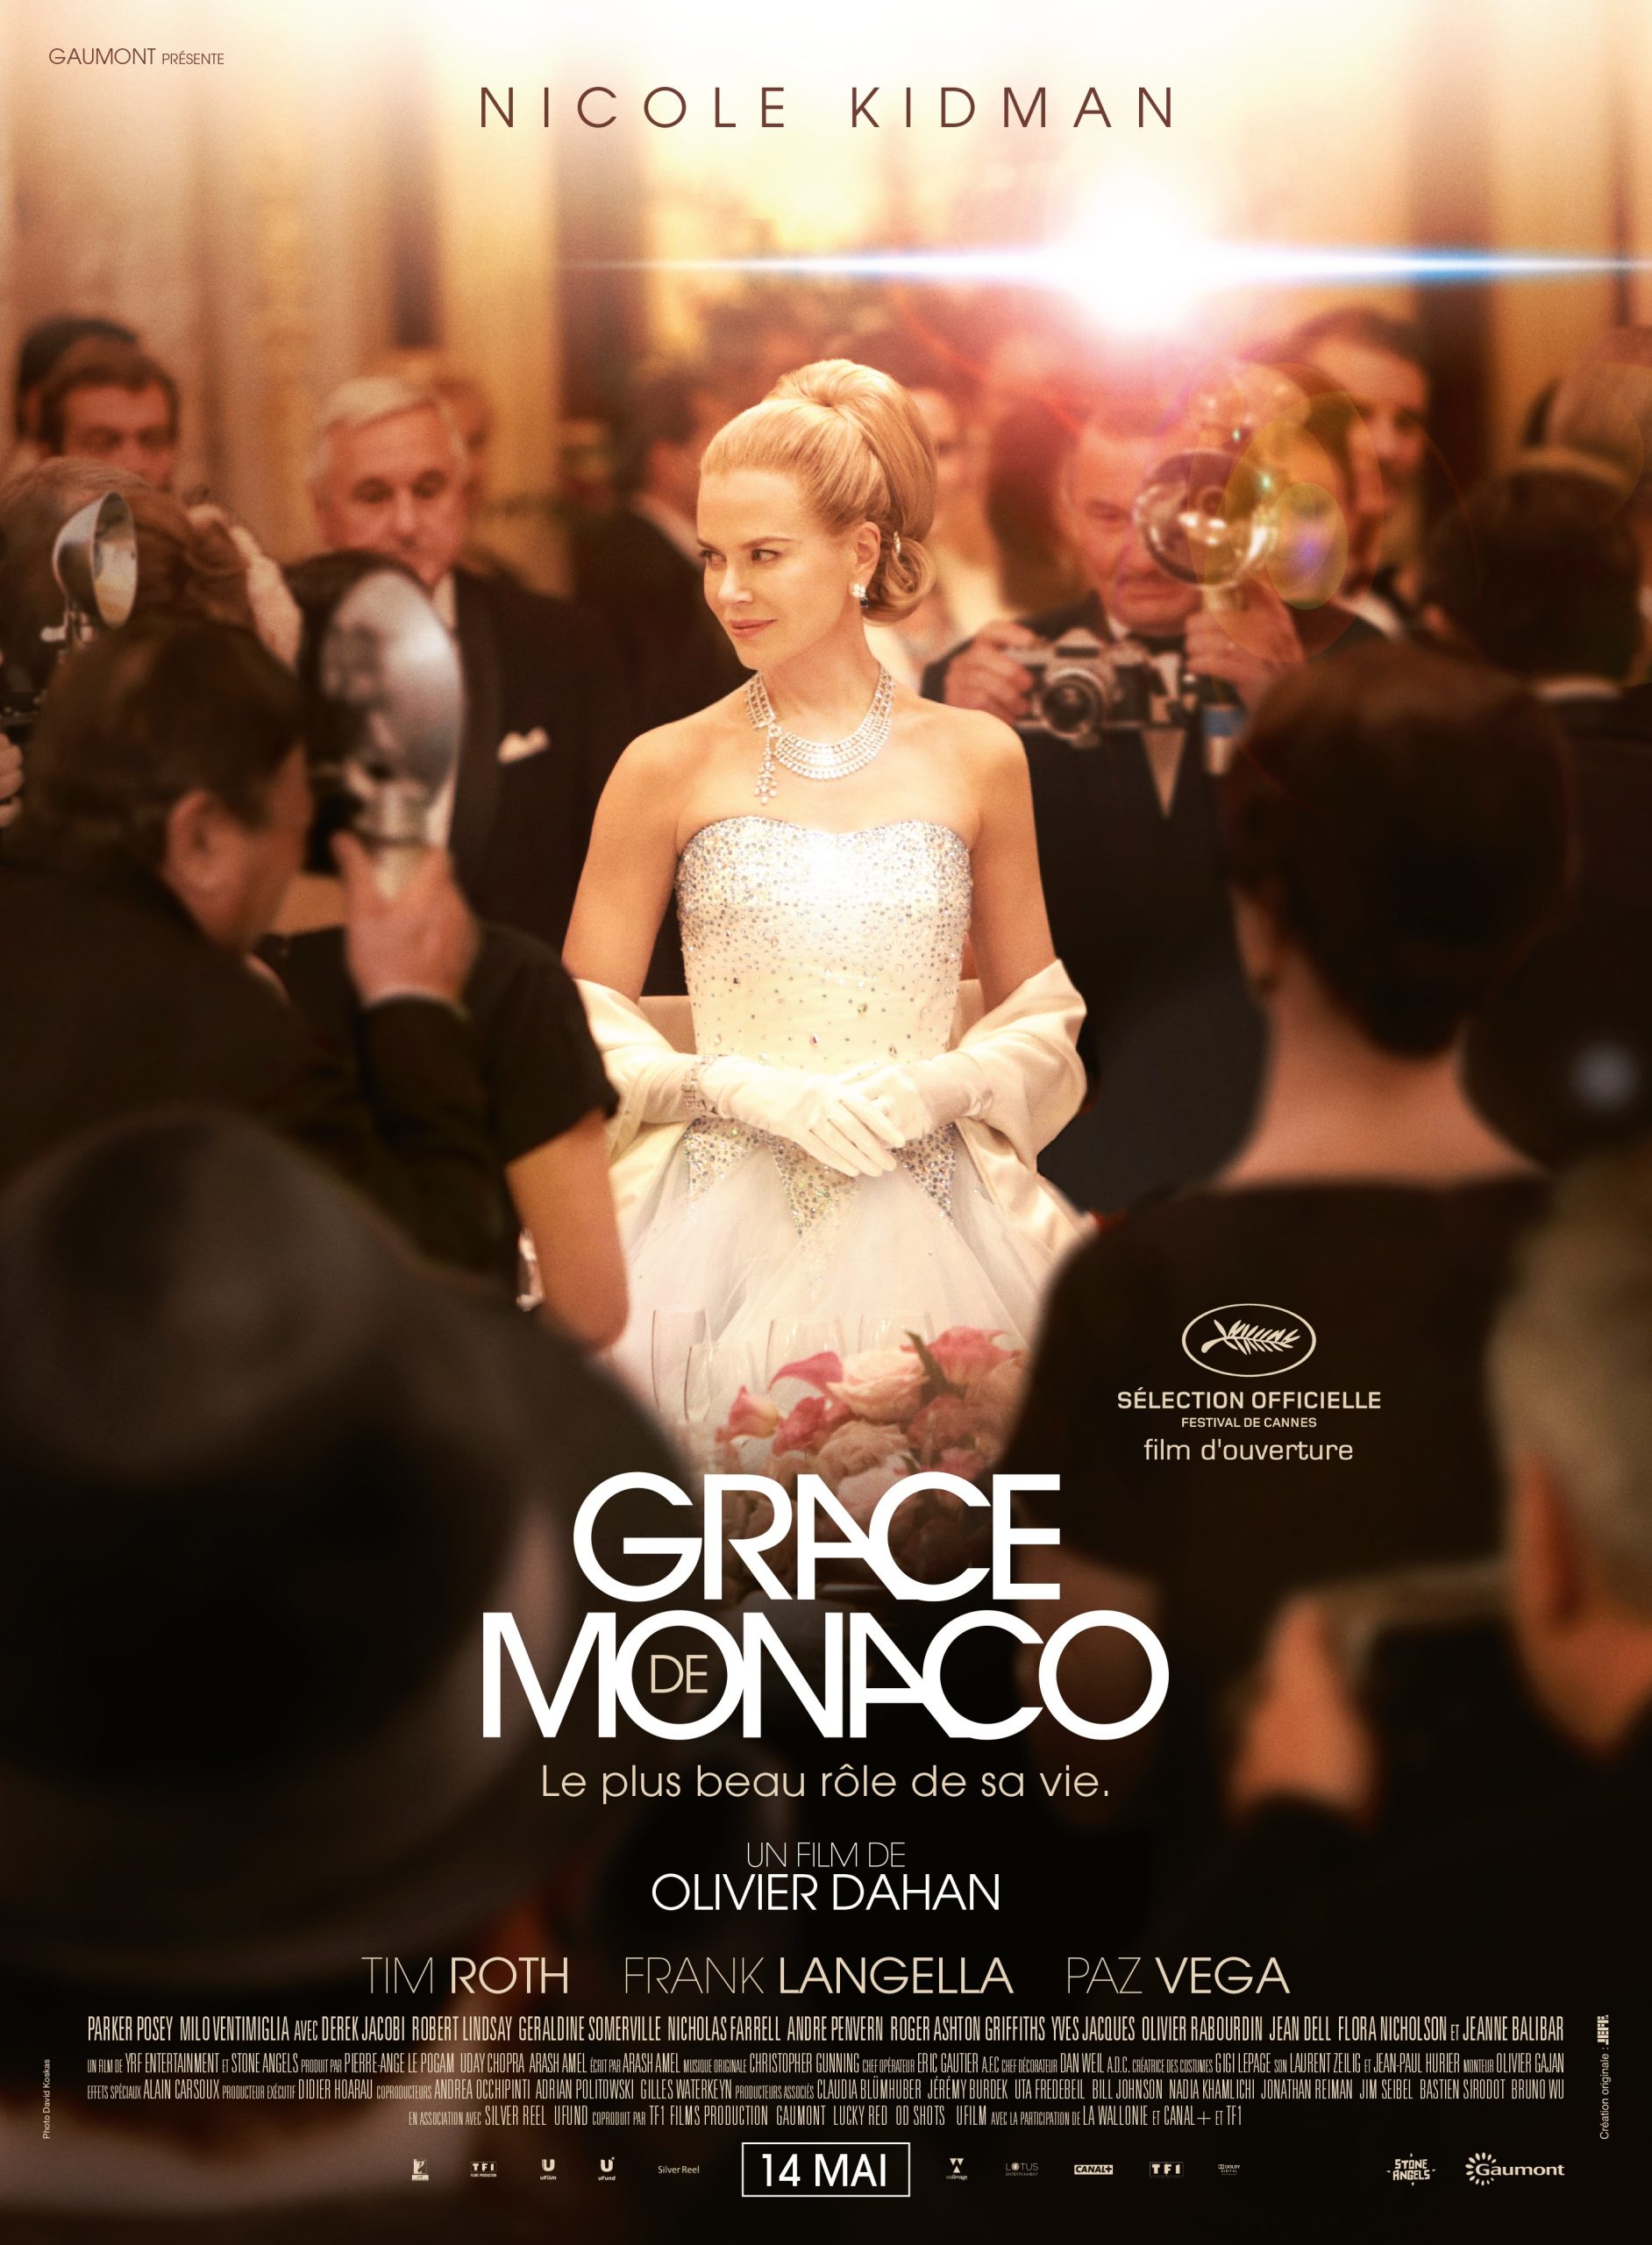 Monako Prensesi Grace